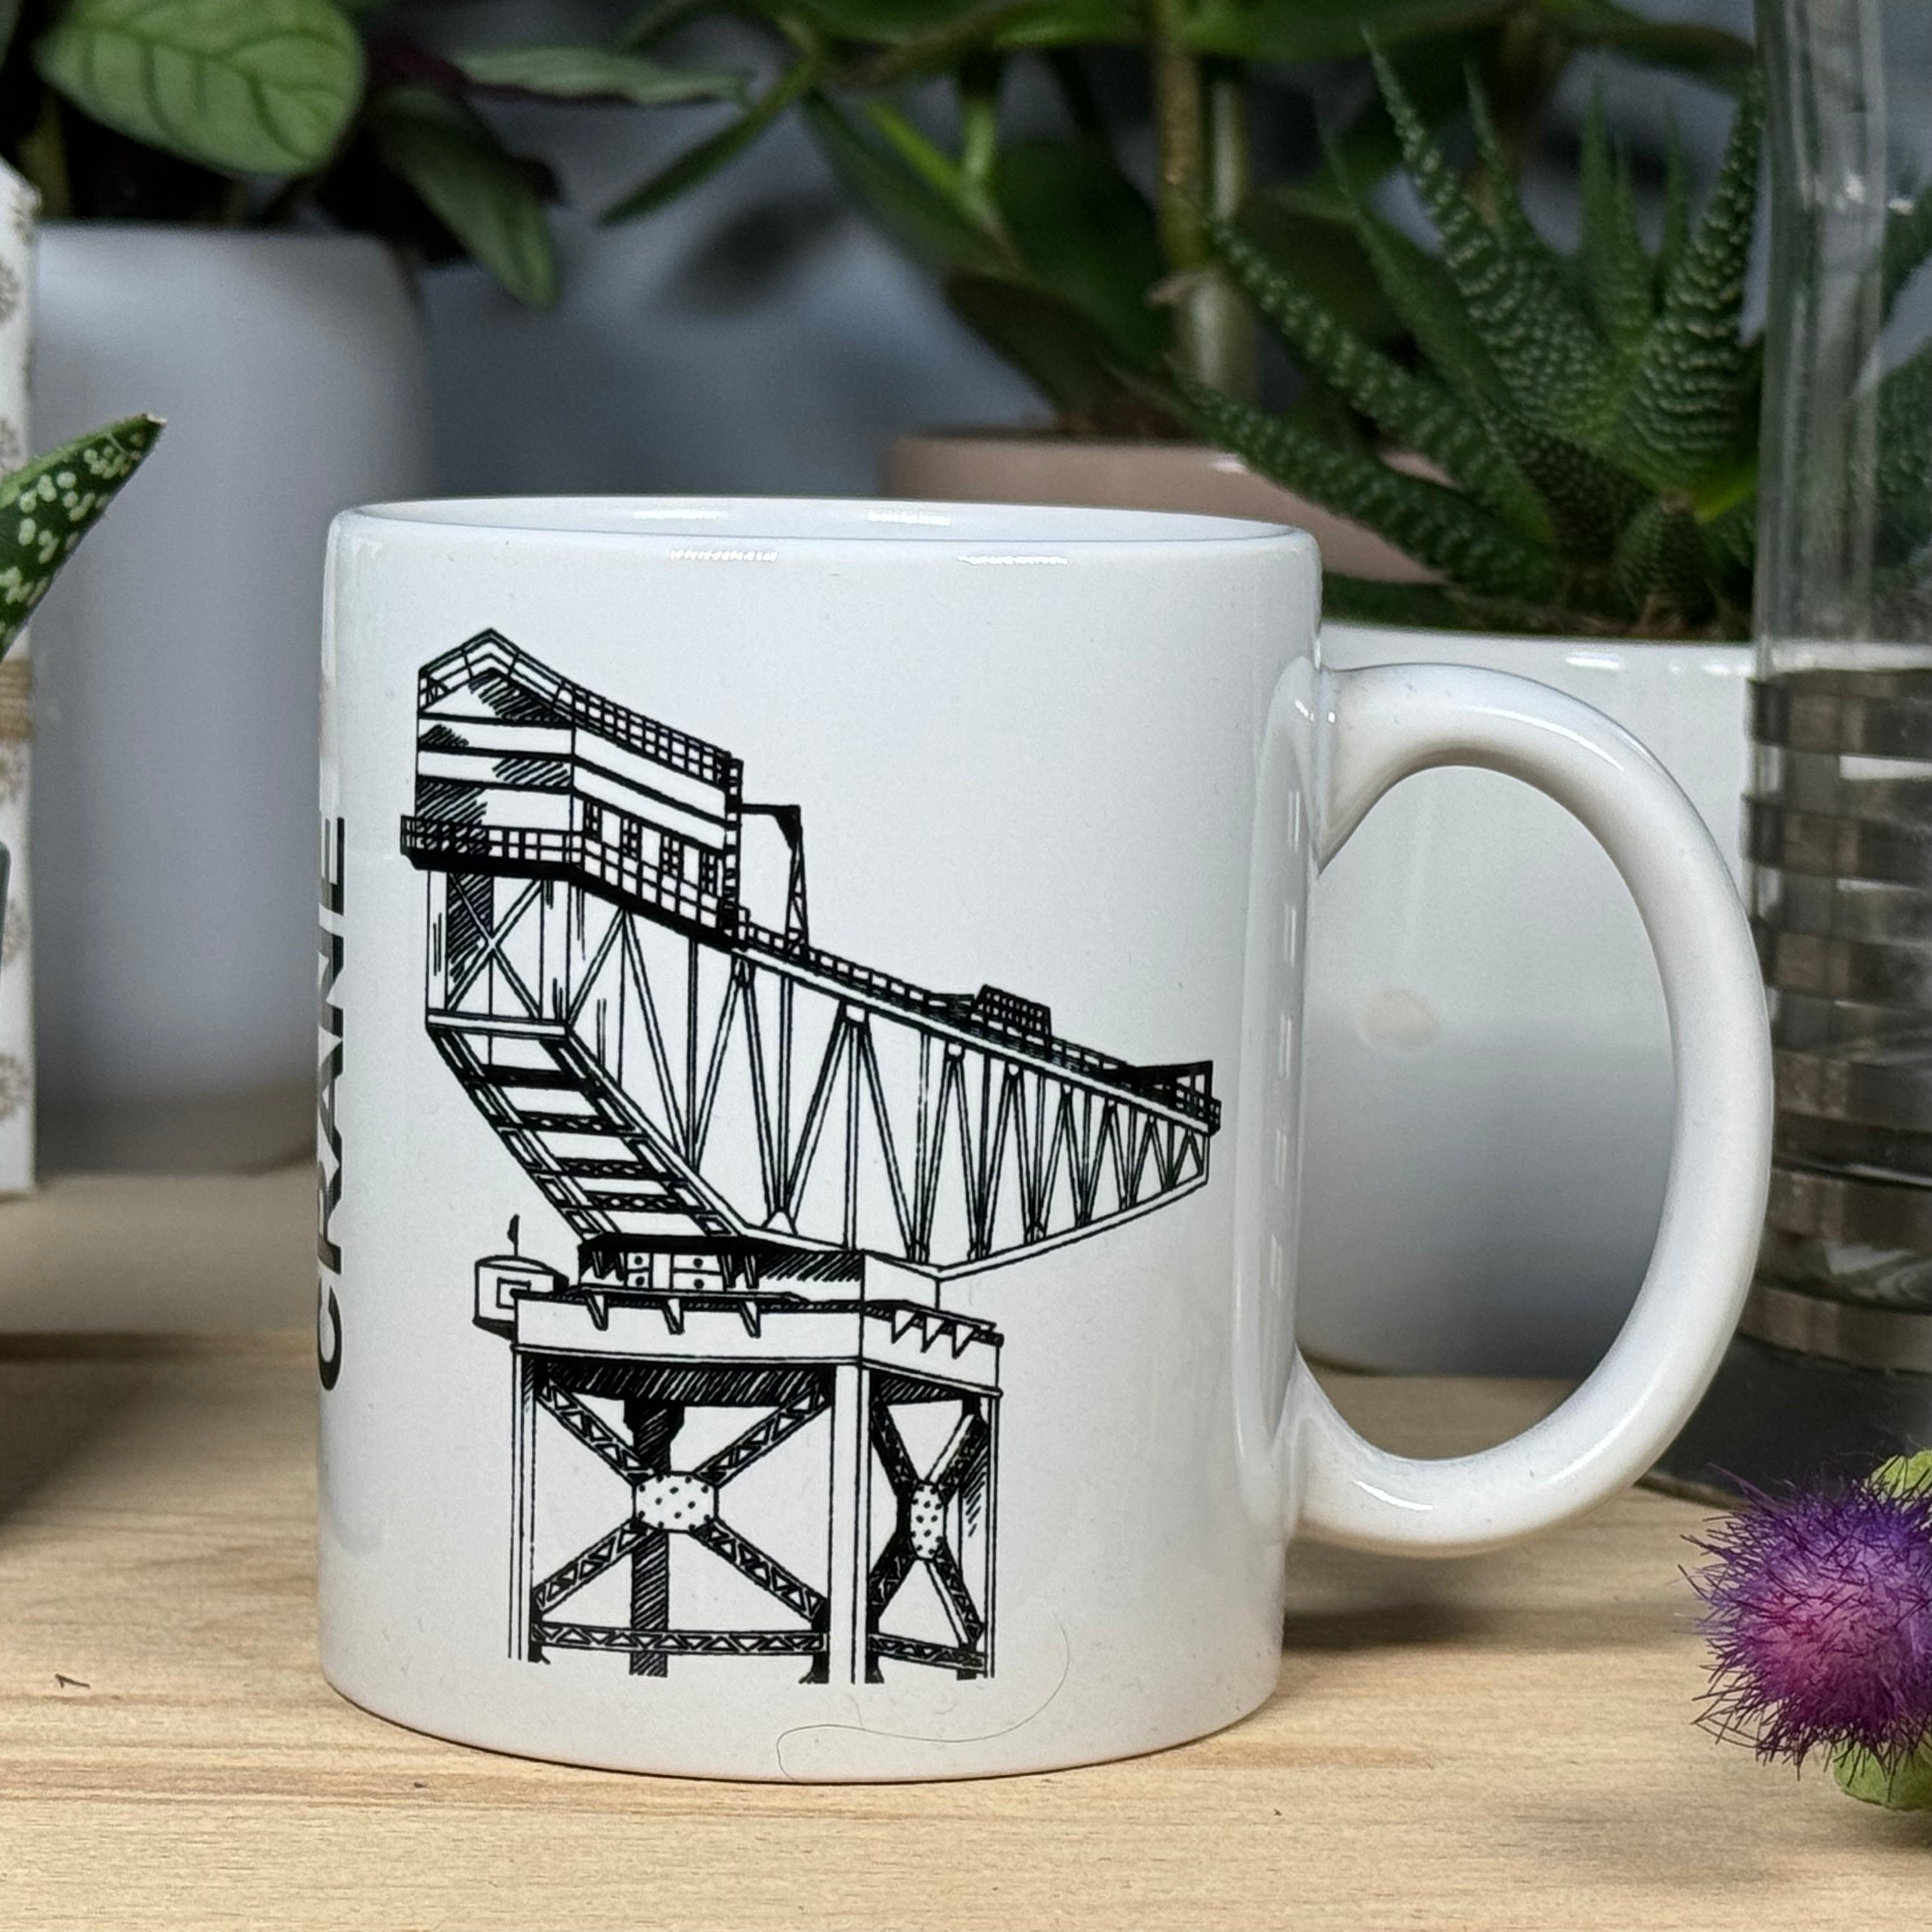 Ceramic mug - Glasgow landmarks - Finnieston Crane